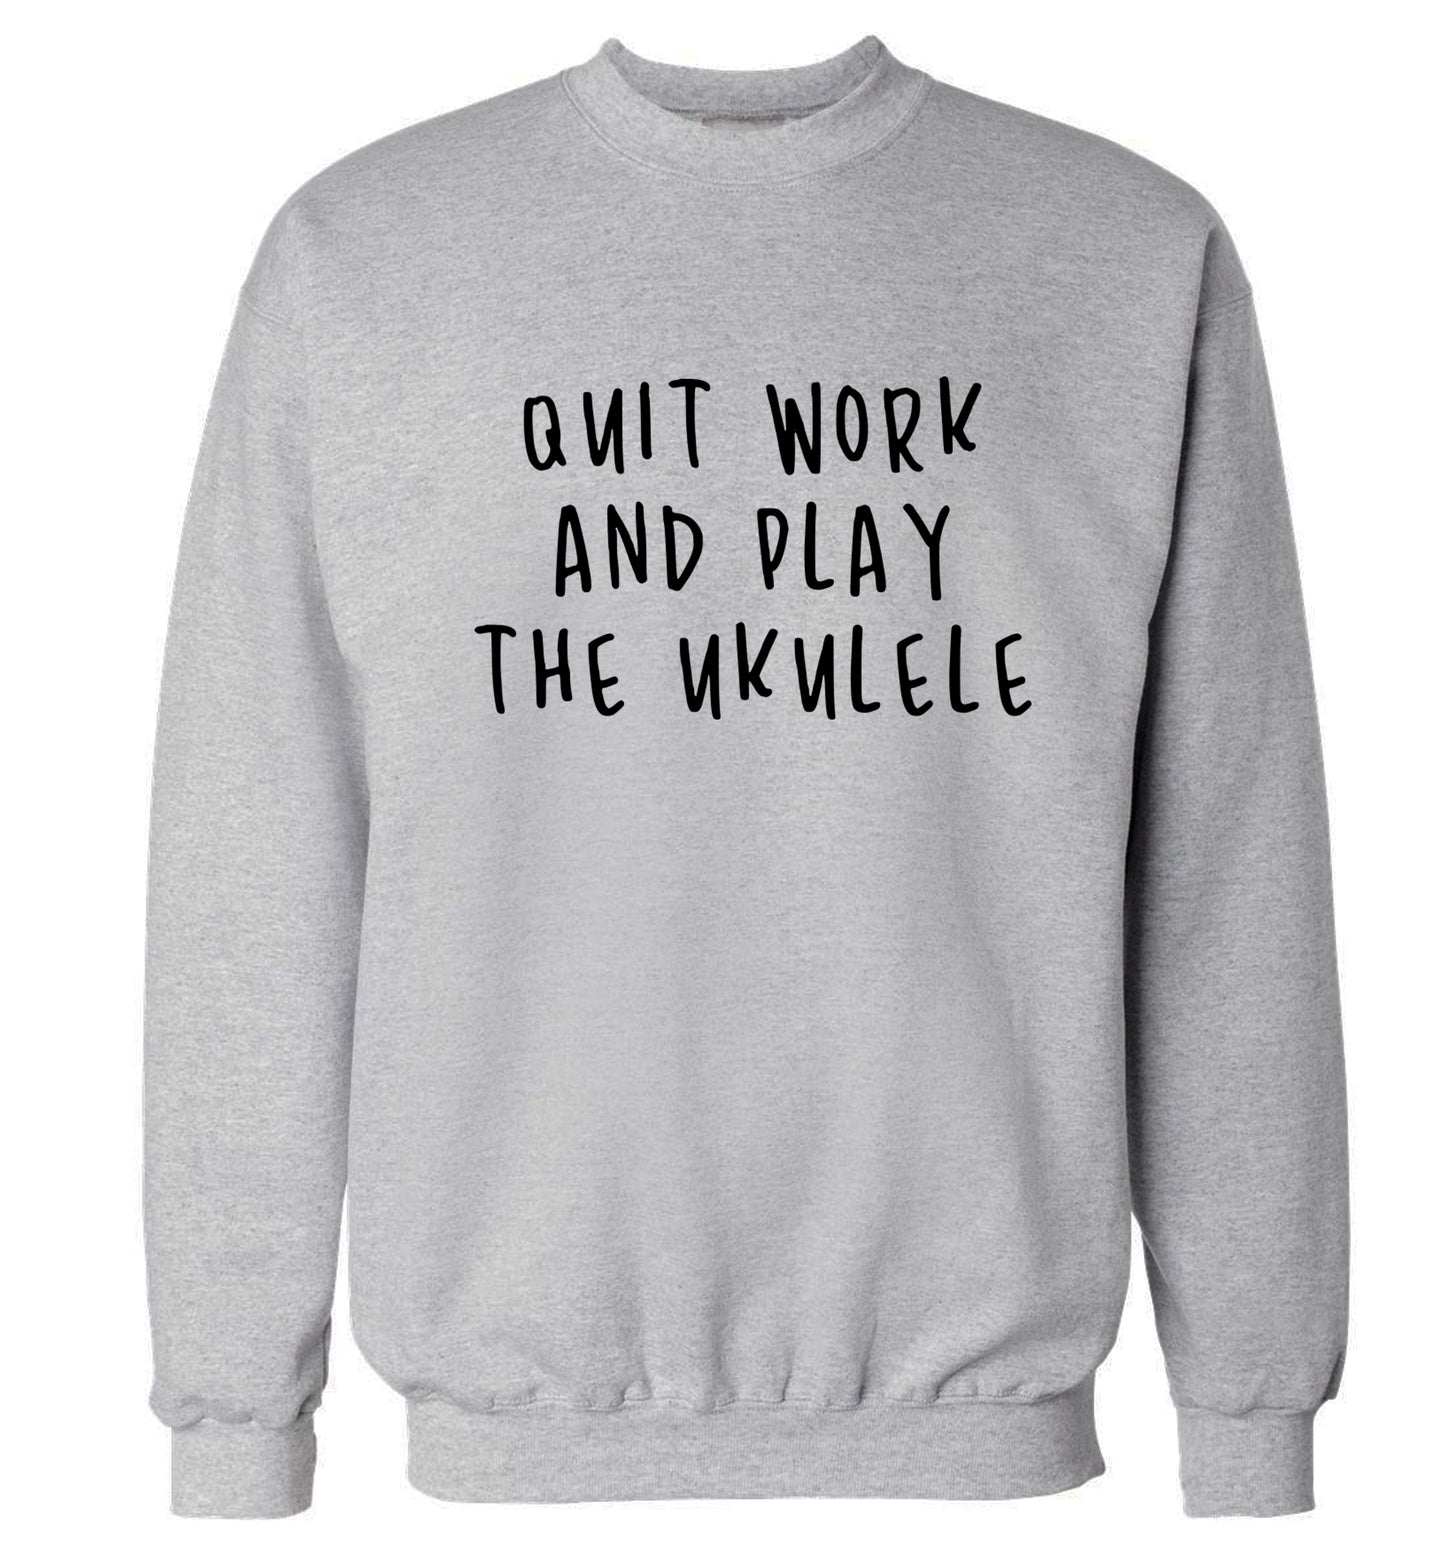 Quit work and play the ukulele Adult's unisex grey Sweater 2XL